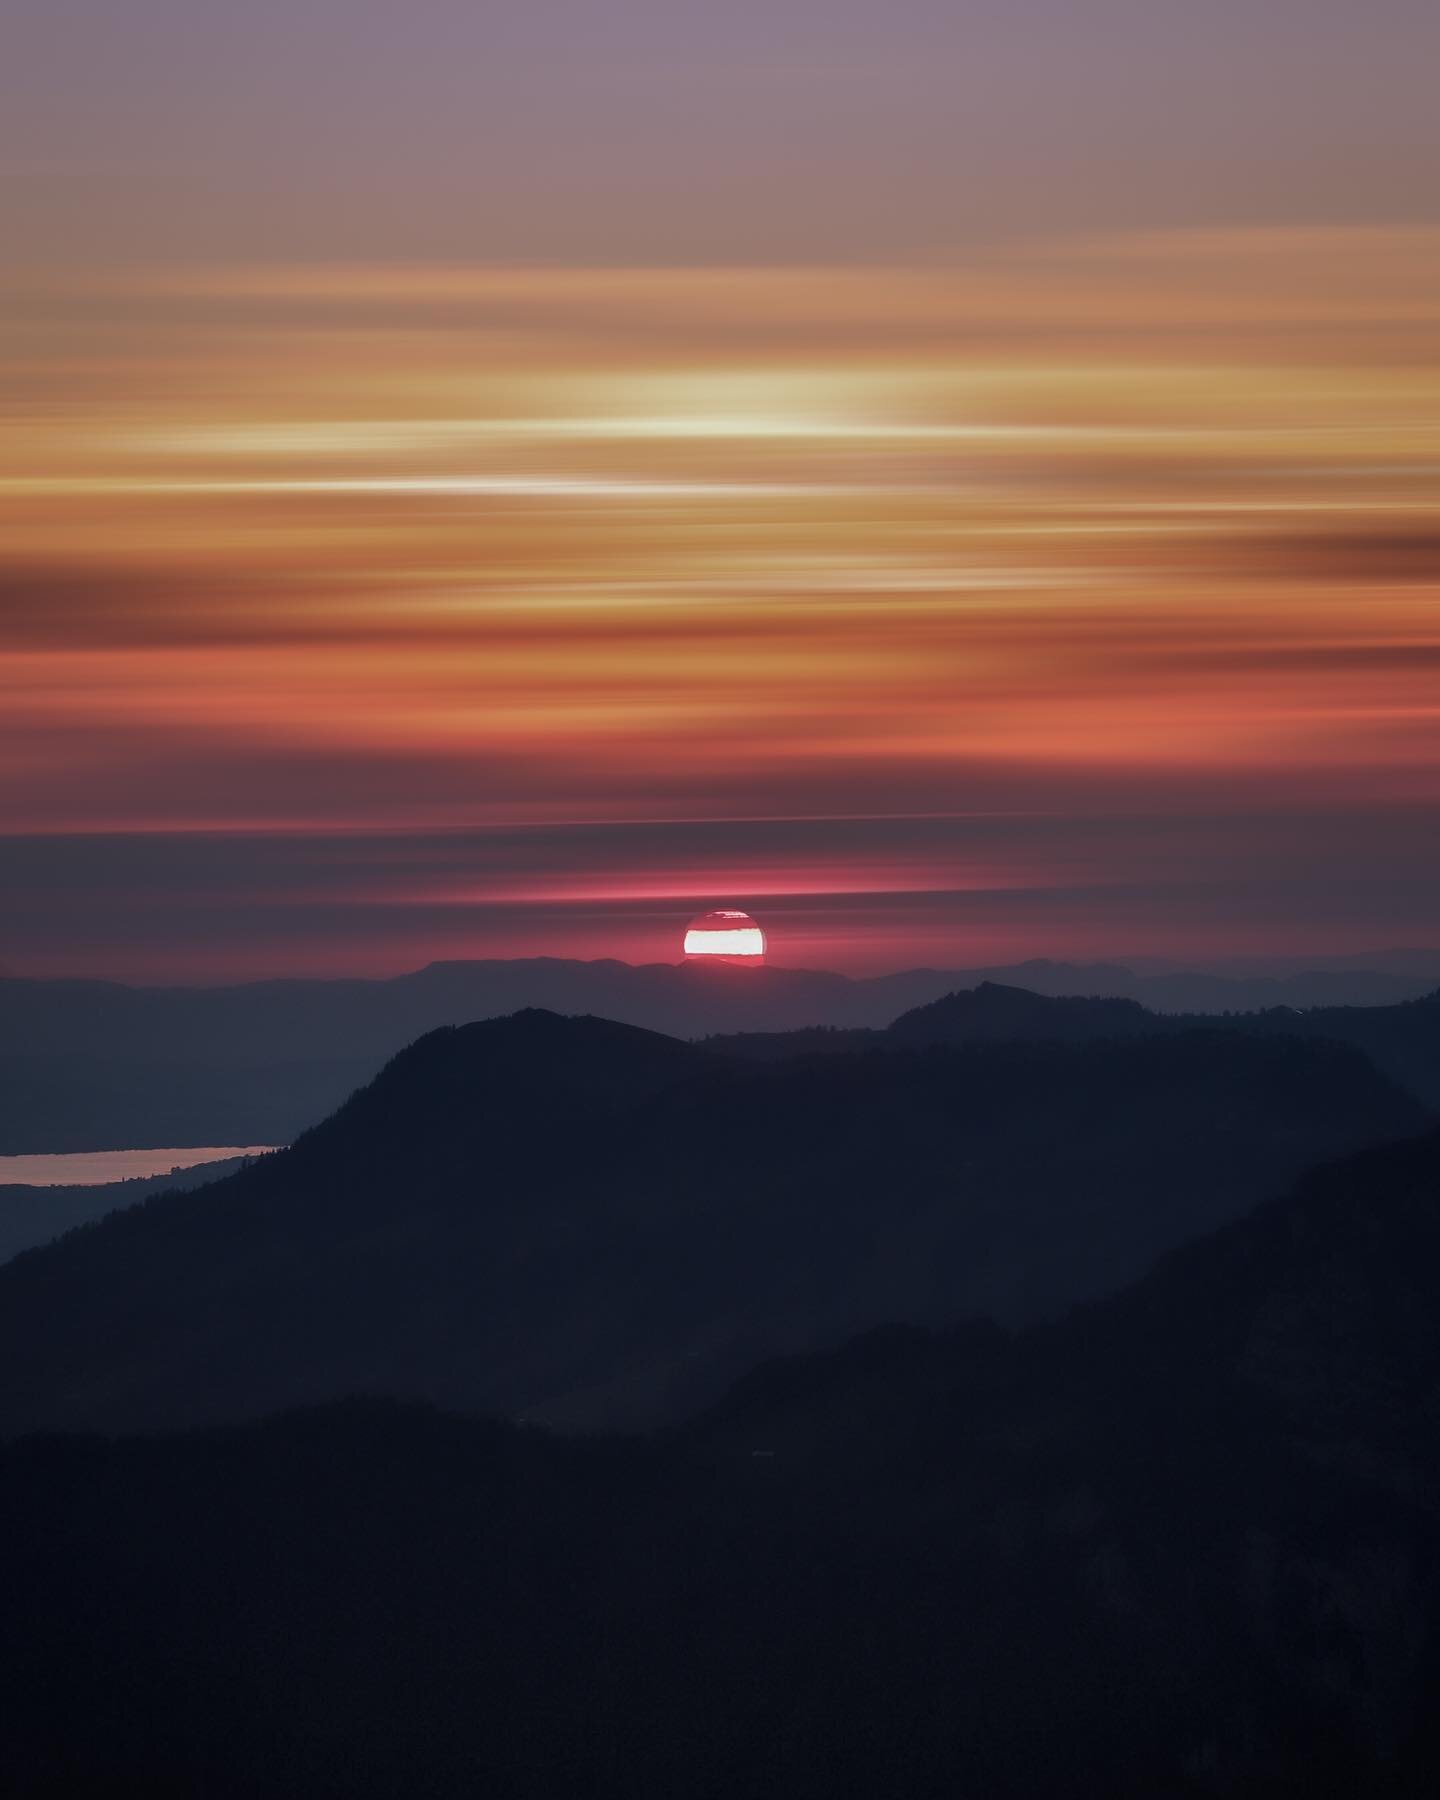 firey skies 
&bull;
&bull;
&bull;
&bull;
#sunset #sungoesdown #fireyskies #ig_swiss #landscapephotography #canonlandscape #stoos #summeriscoming #mountainlovers #mountainvibes #mountainsunset